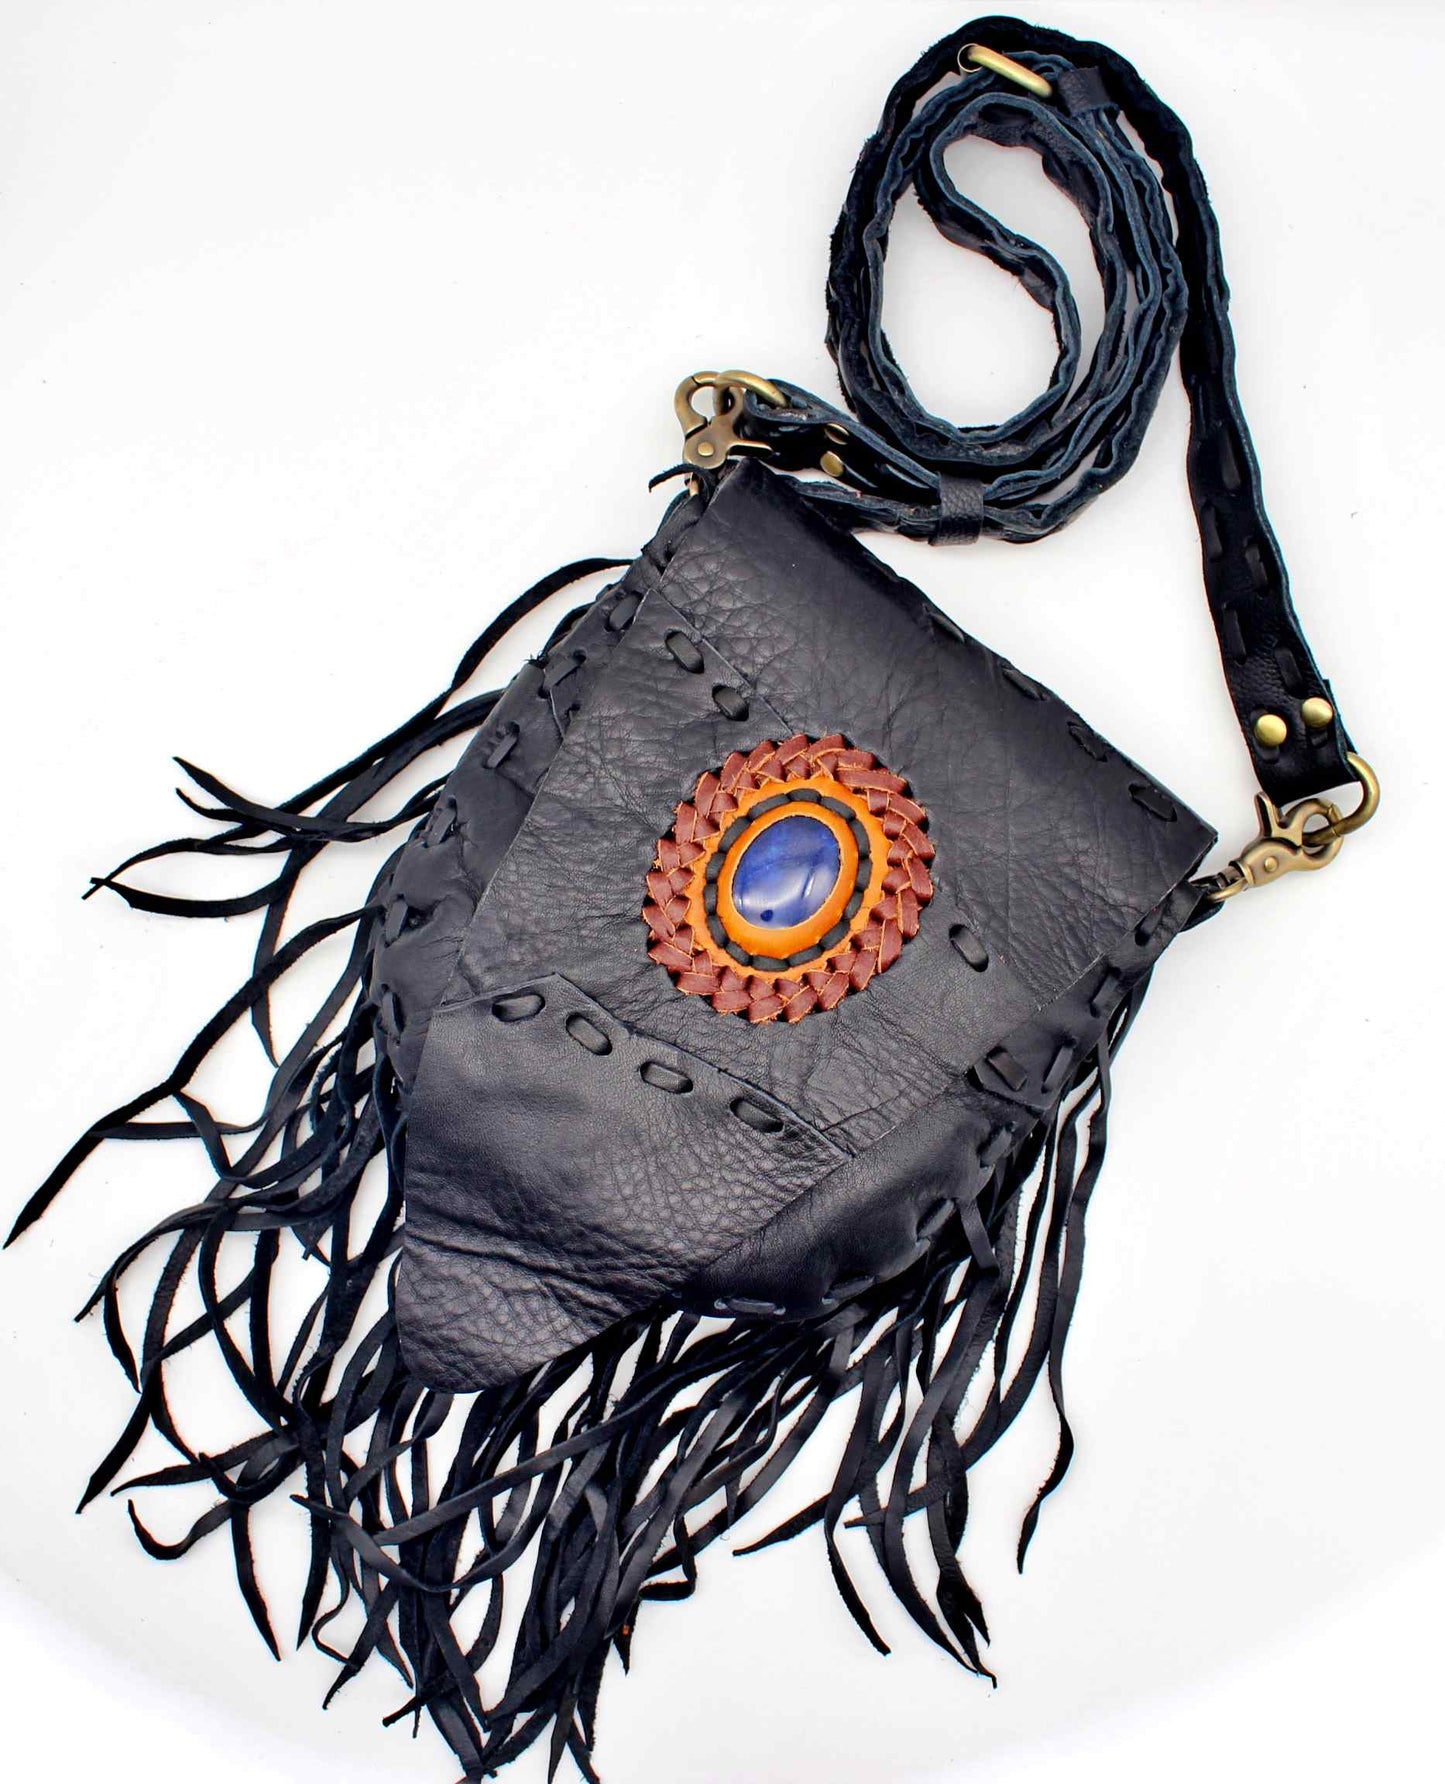 Handmade genuine leather bohemian saddle bag with fringe and premium stone accent